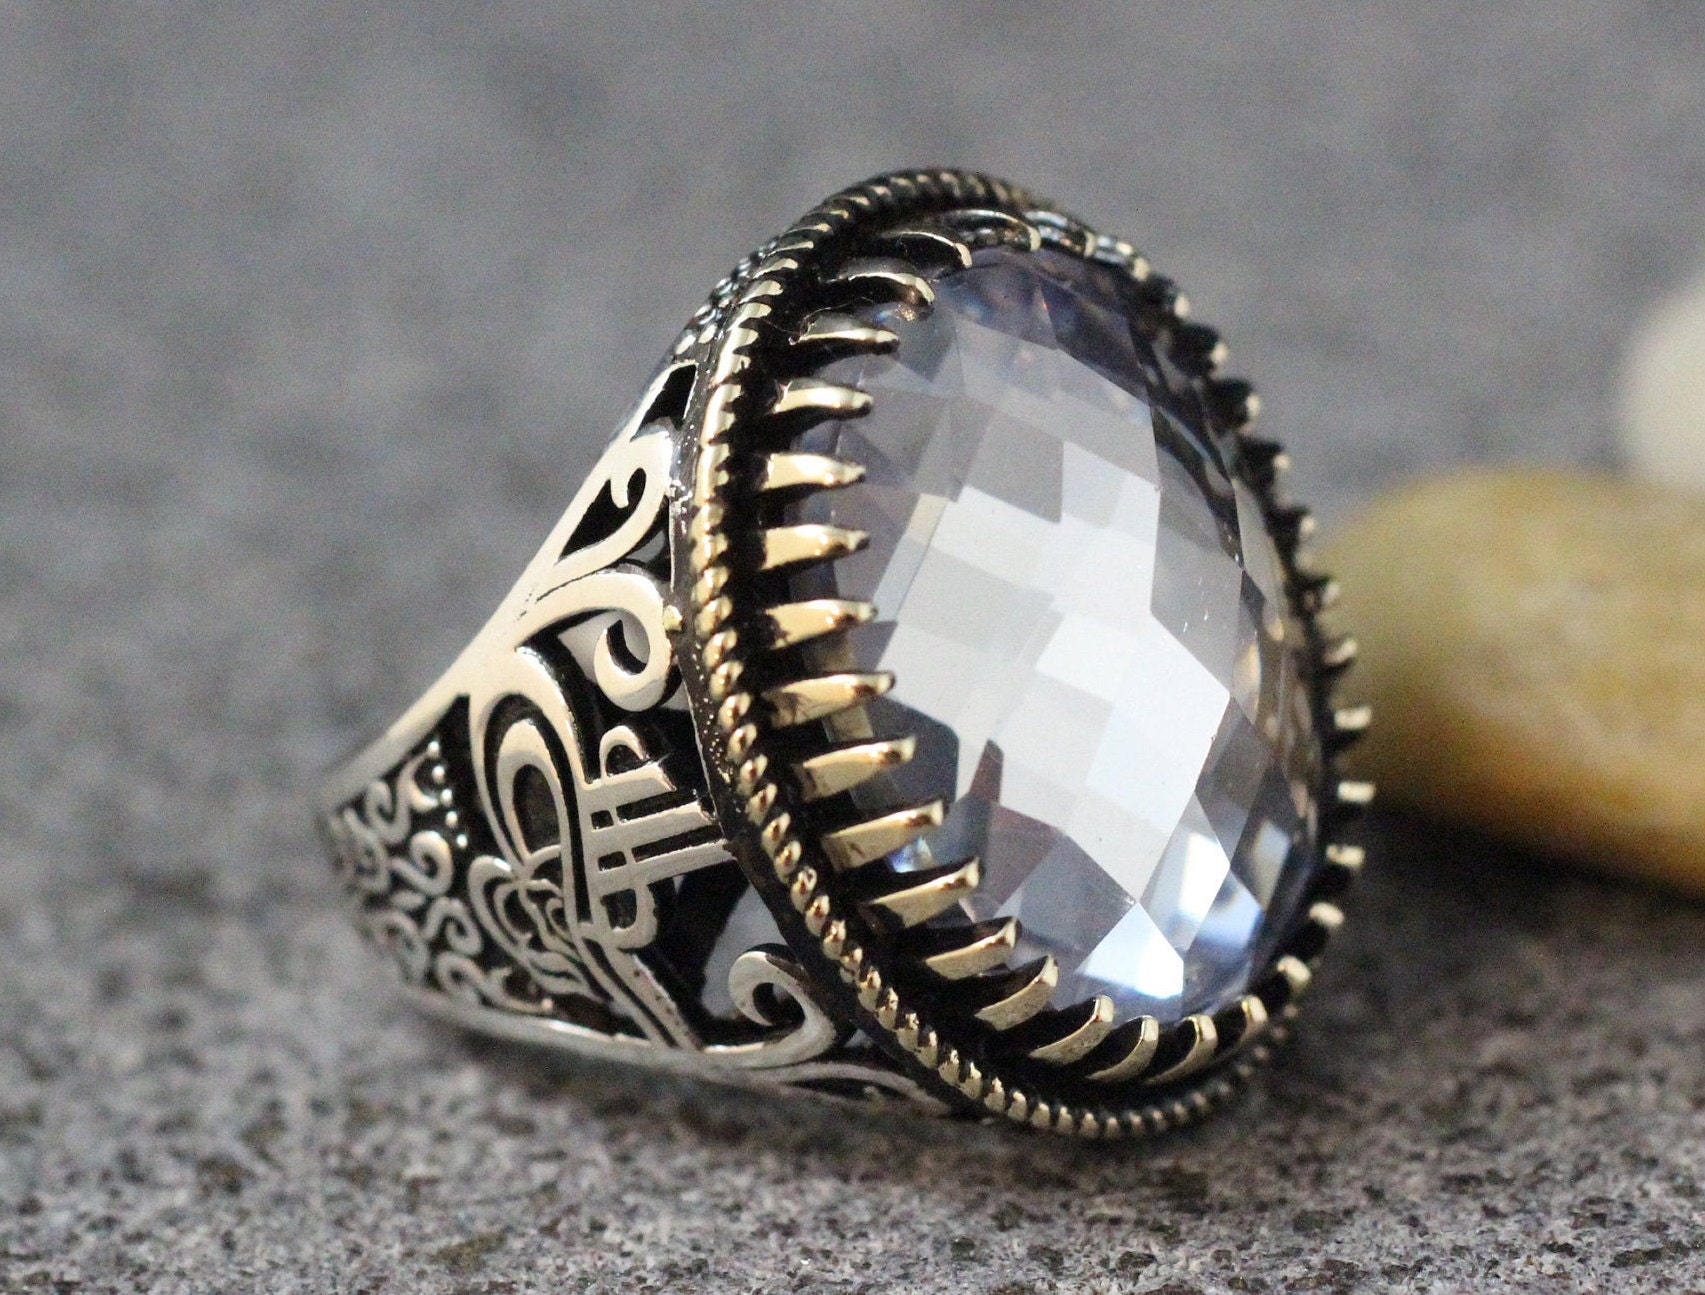 Baraha Jewellery Industries Pvt Ltd, विश्वासको प्रतीक - Single stone with  jarkan Gold ring weight: 4.86 gm 24K Price: NPR 50,100/- #goldring #gold # ring #cuttingring #barahagroup #baraha #barahajewellery #gold #diamond  #ornaments #silver #